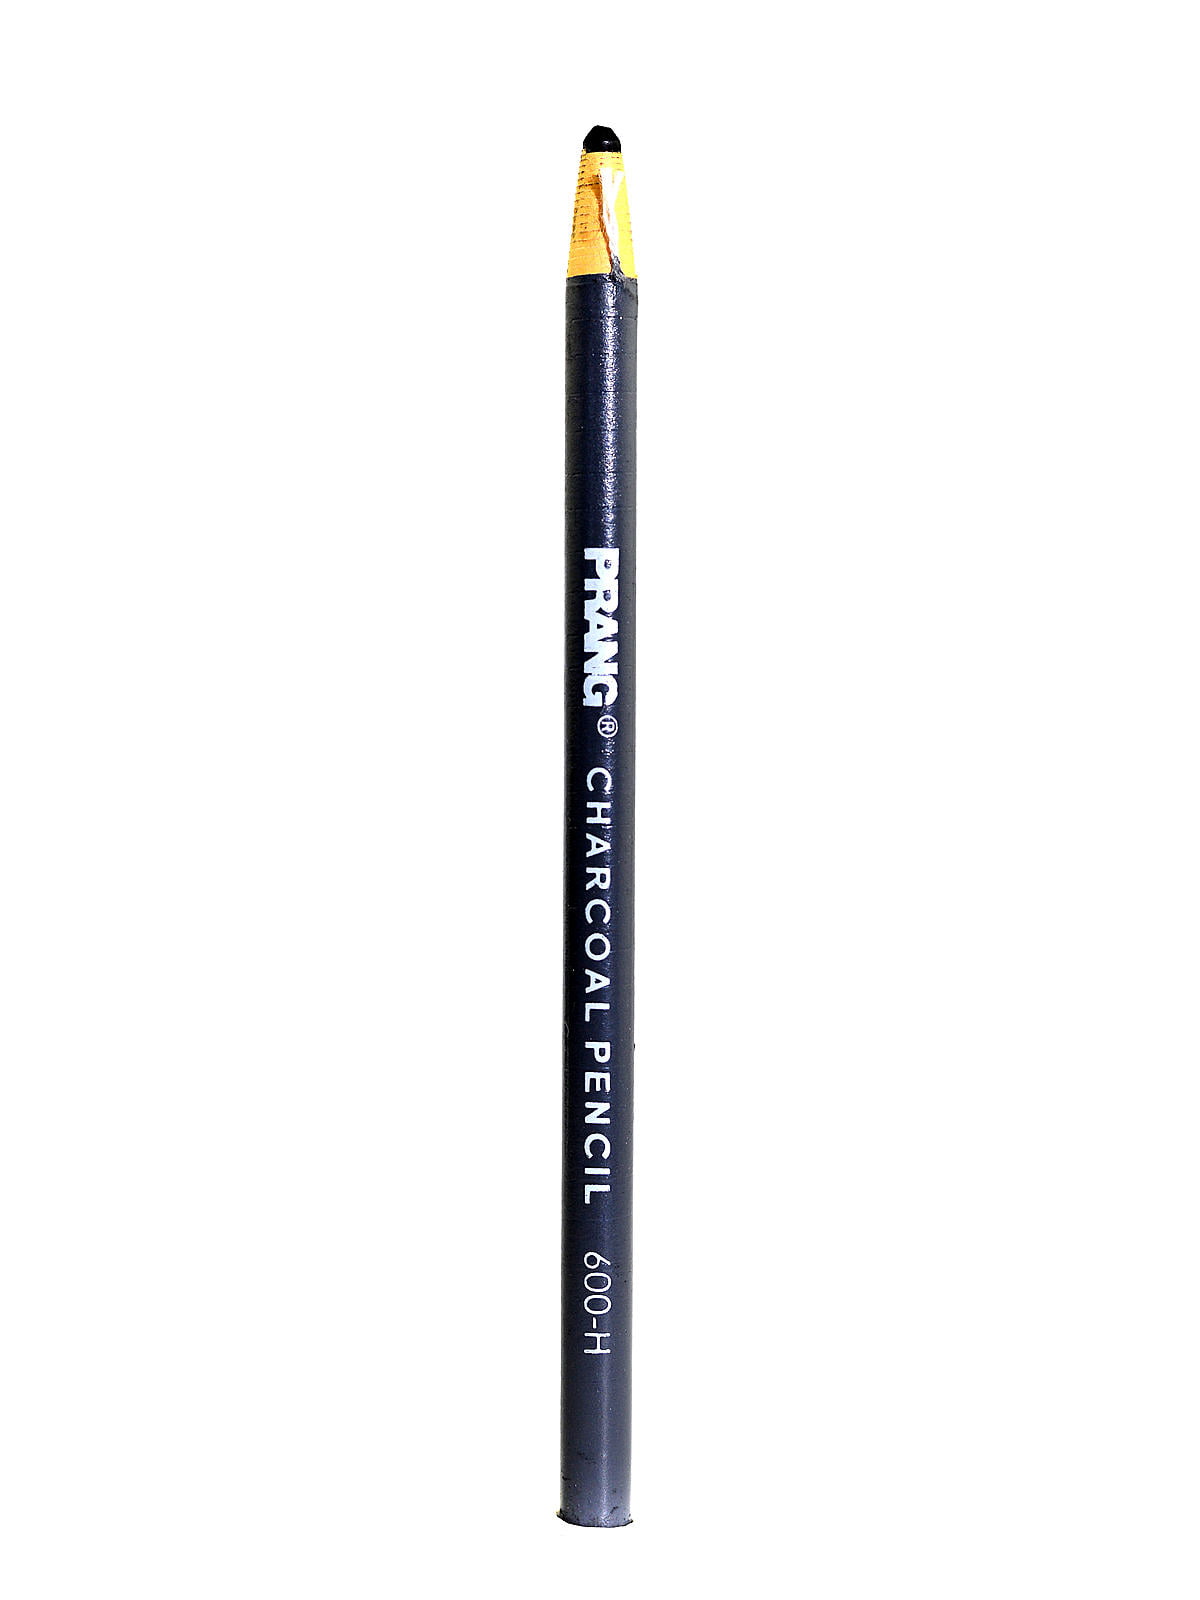 White carbon pencils 12pcs/box Wooden non-toxic pencils Sketching Drawing  Soft pastels Crayons Charcoal pencils